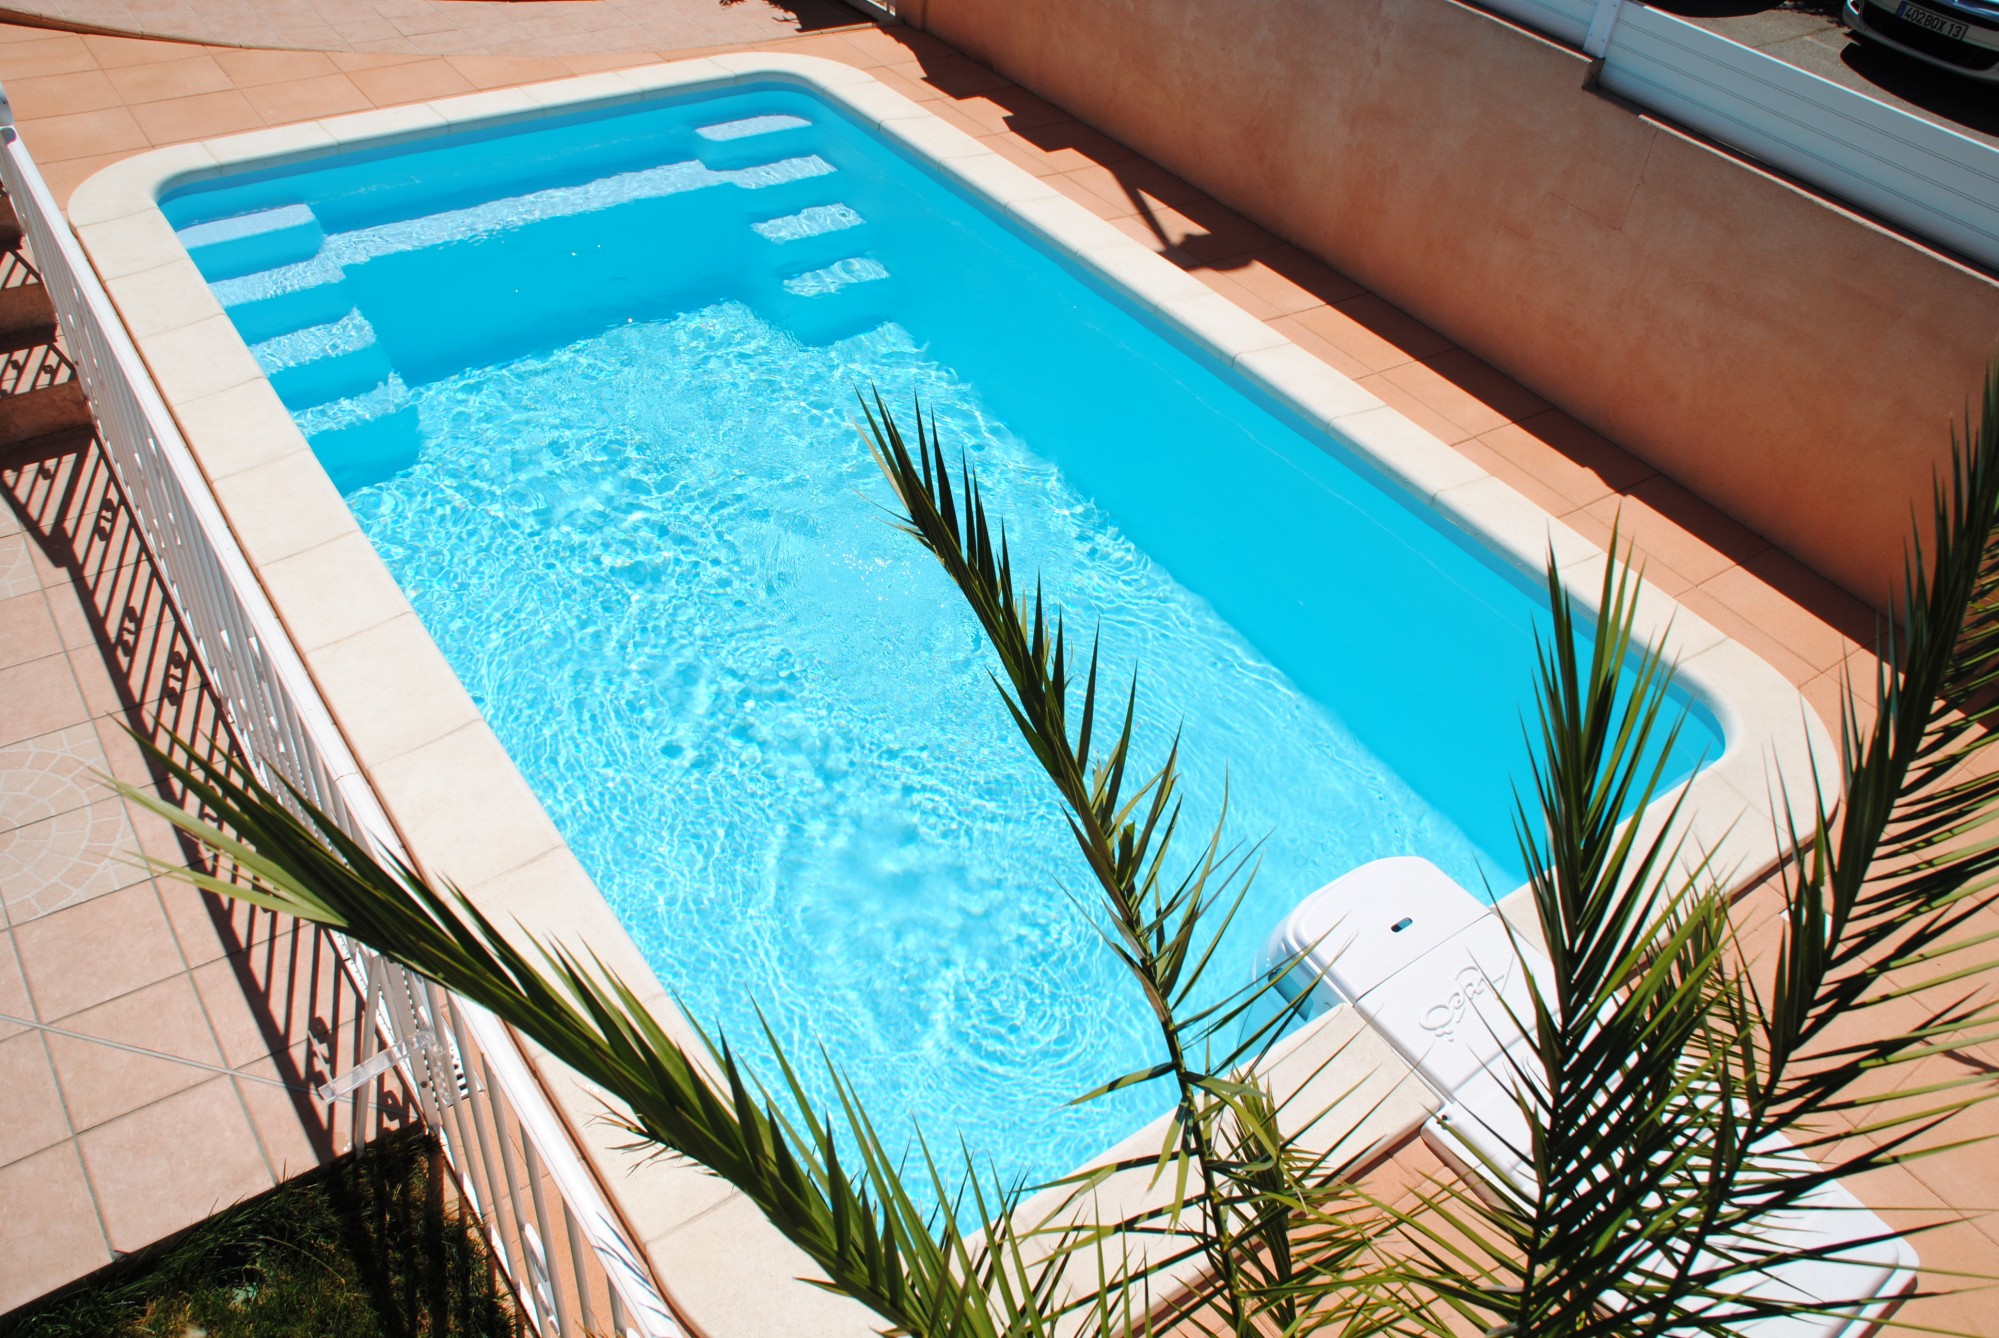 Acheter une piscine coque rectangulaire 6X3 dans le Gard